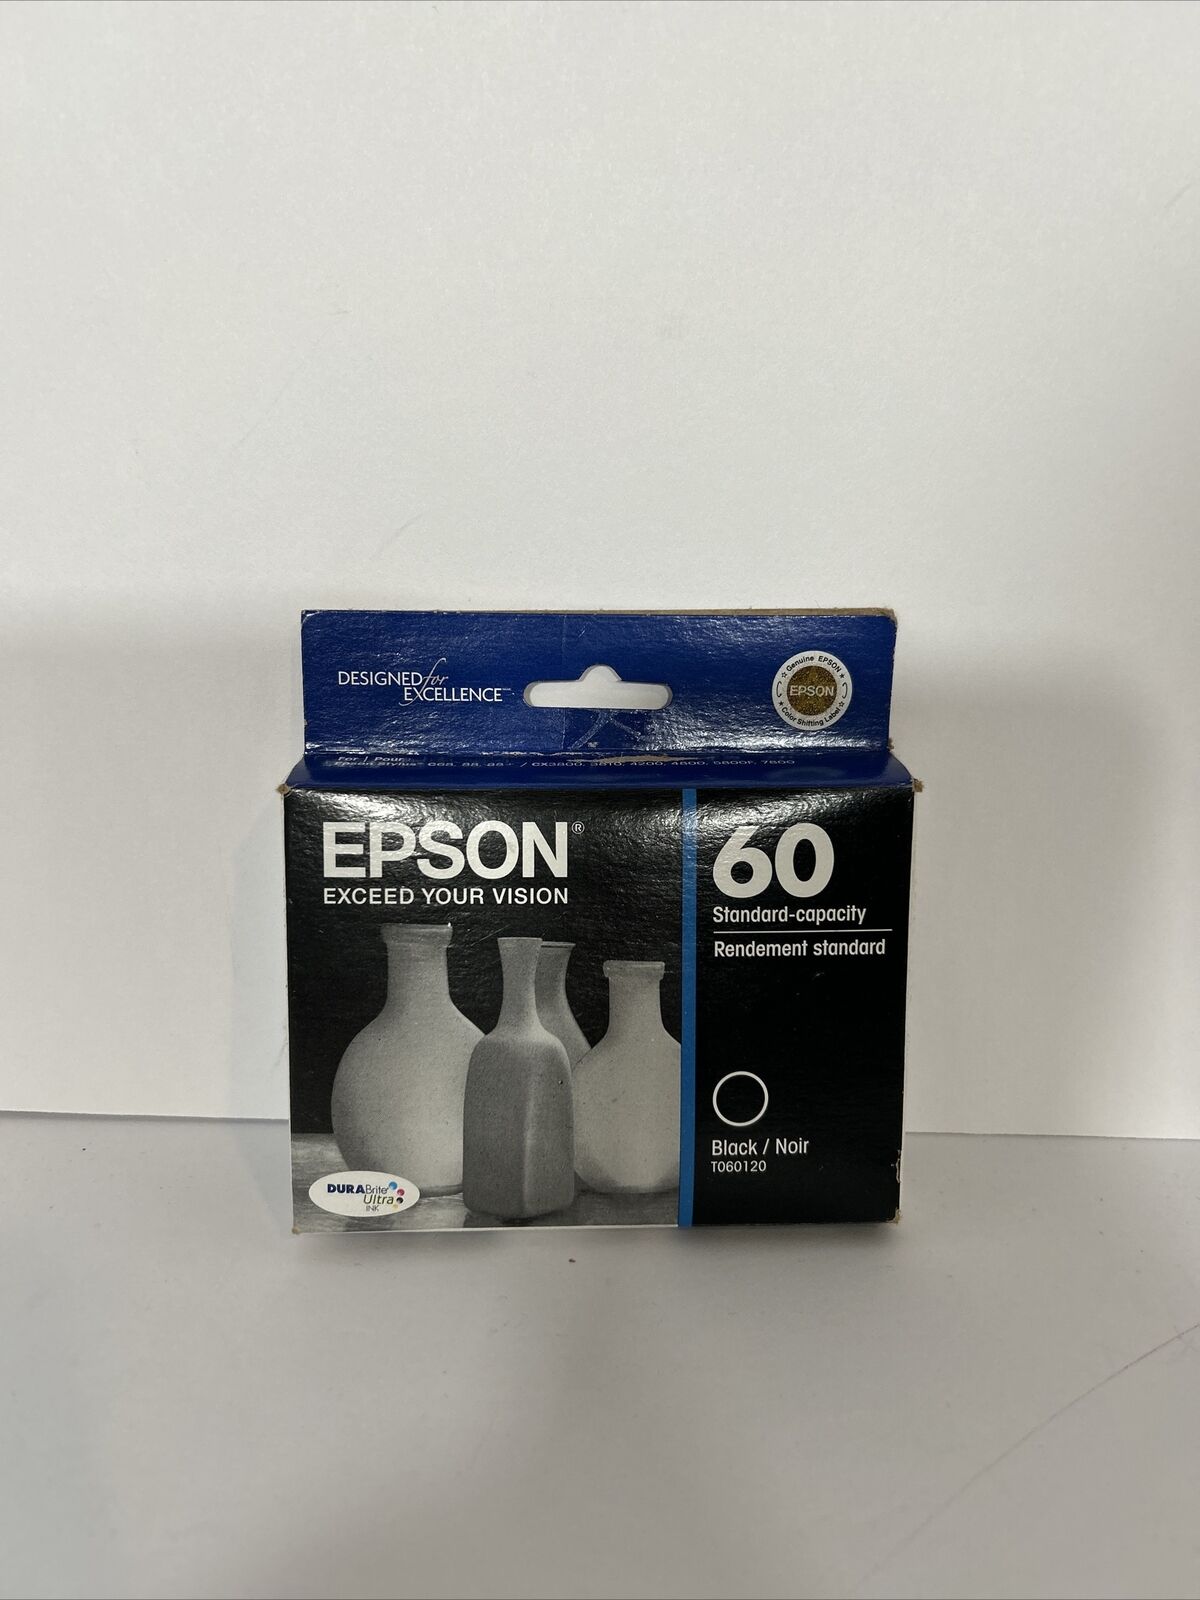 NEW Epson 60 Standard Capacity T060120 Black Ink Cartridge Expires 04/2015